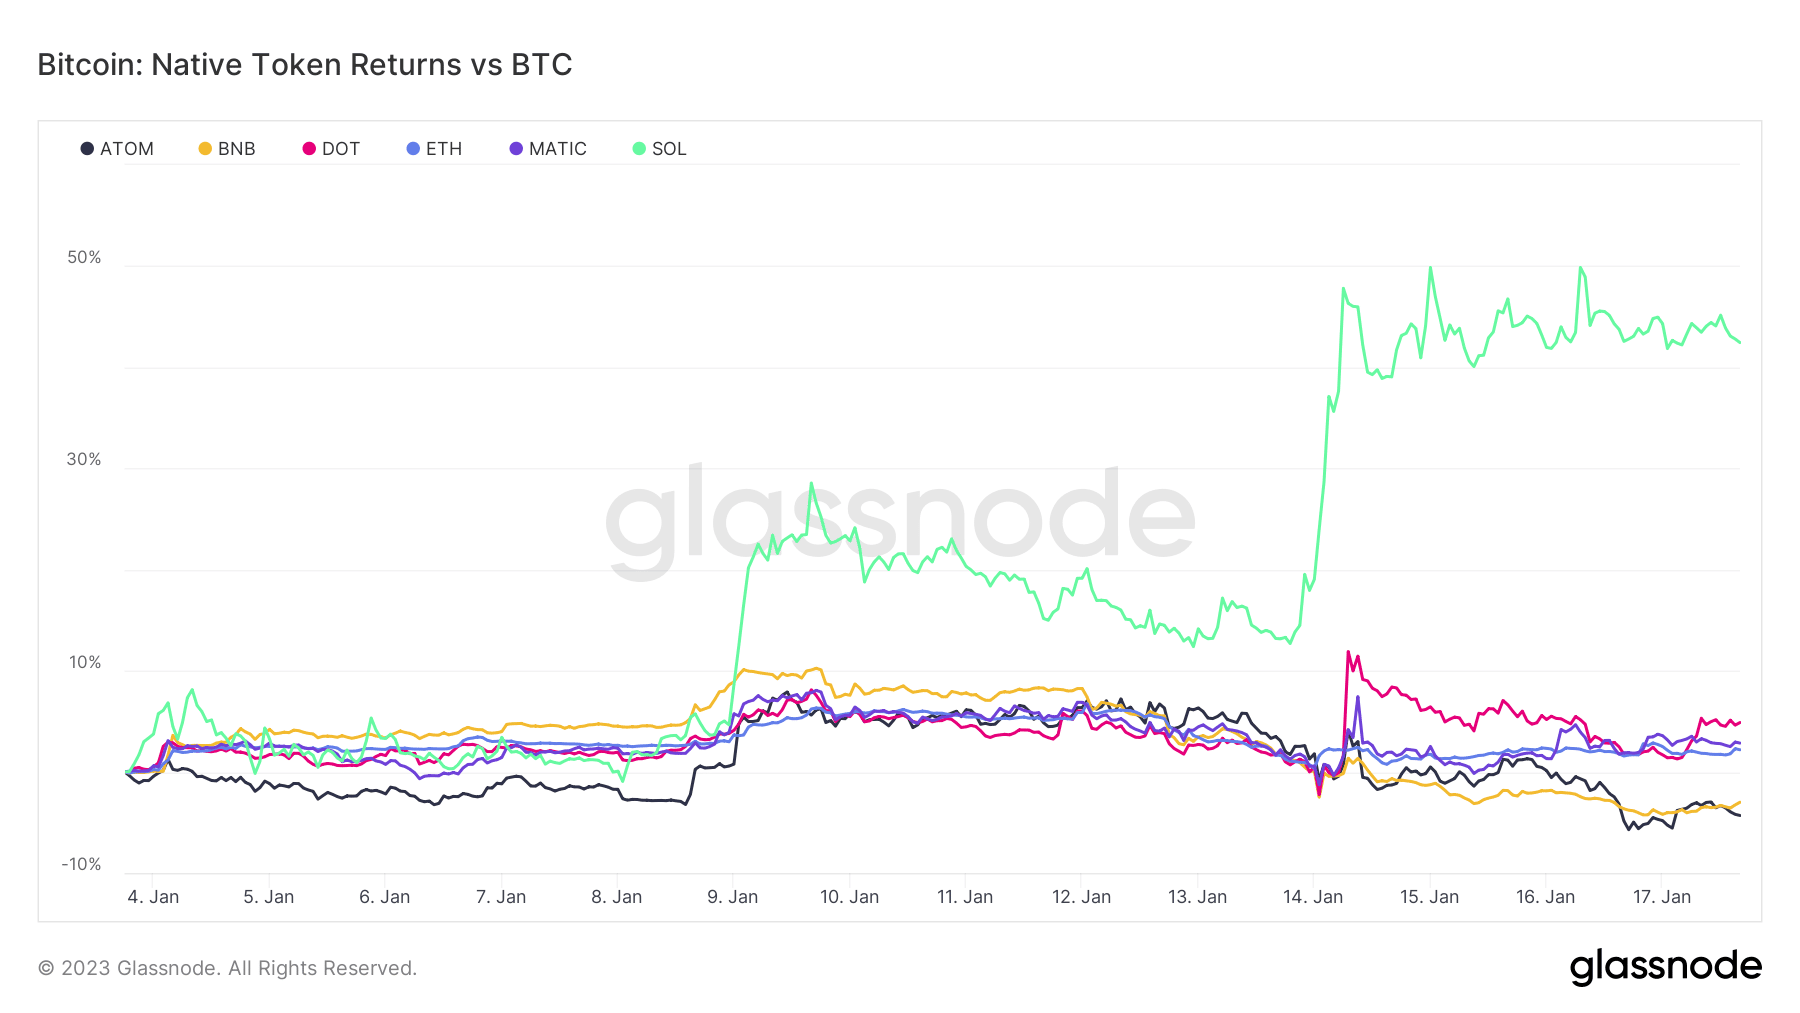 Native Token Returns vs. BTC: (Source: Glassnode)